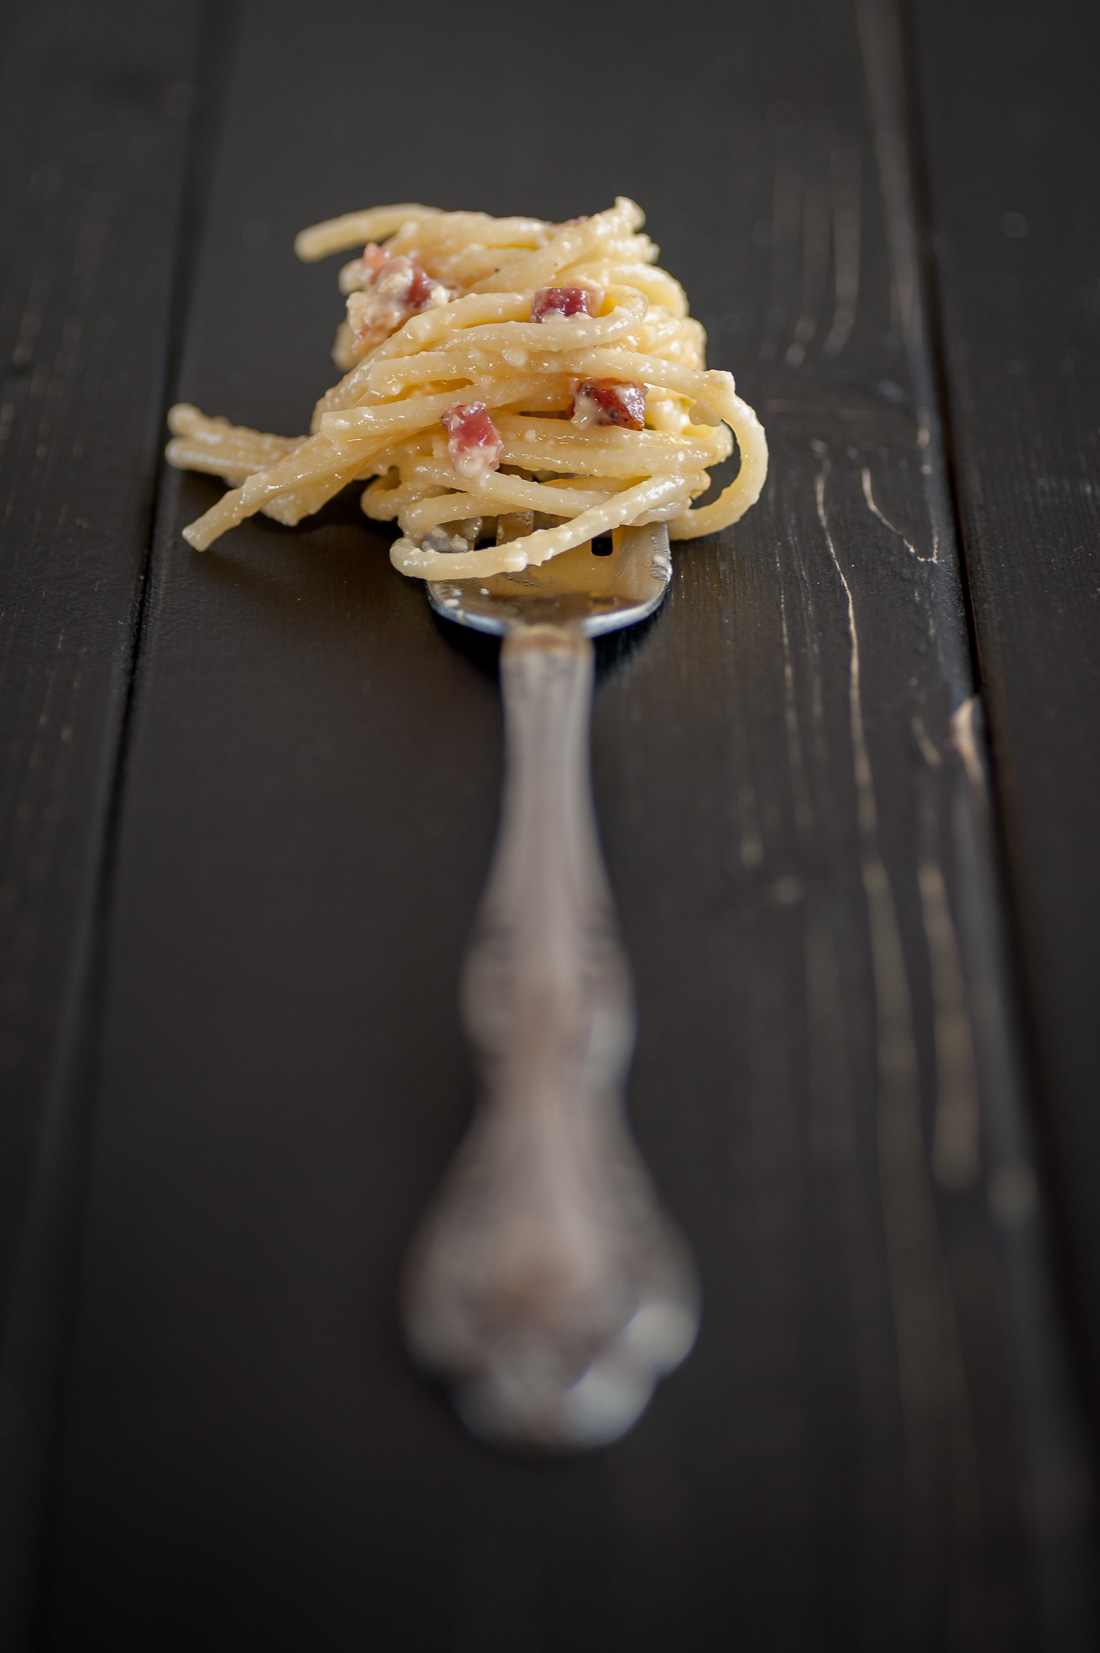 Spaghetti Carbonara with Smokey Bacon and Spicy Parmesan by Eve | nordbrise.net (Spaghetti Carbonara mit rauchigem Speck und würzigem Parmesan)